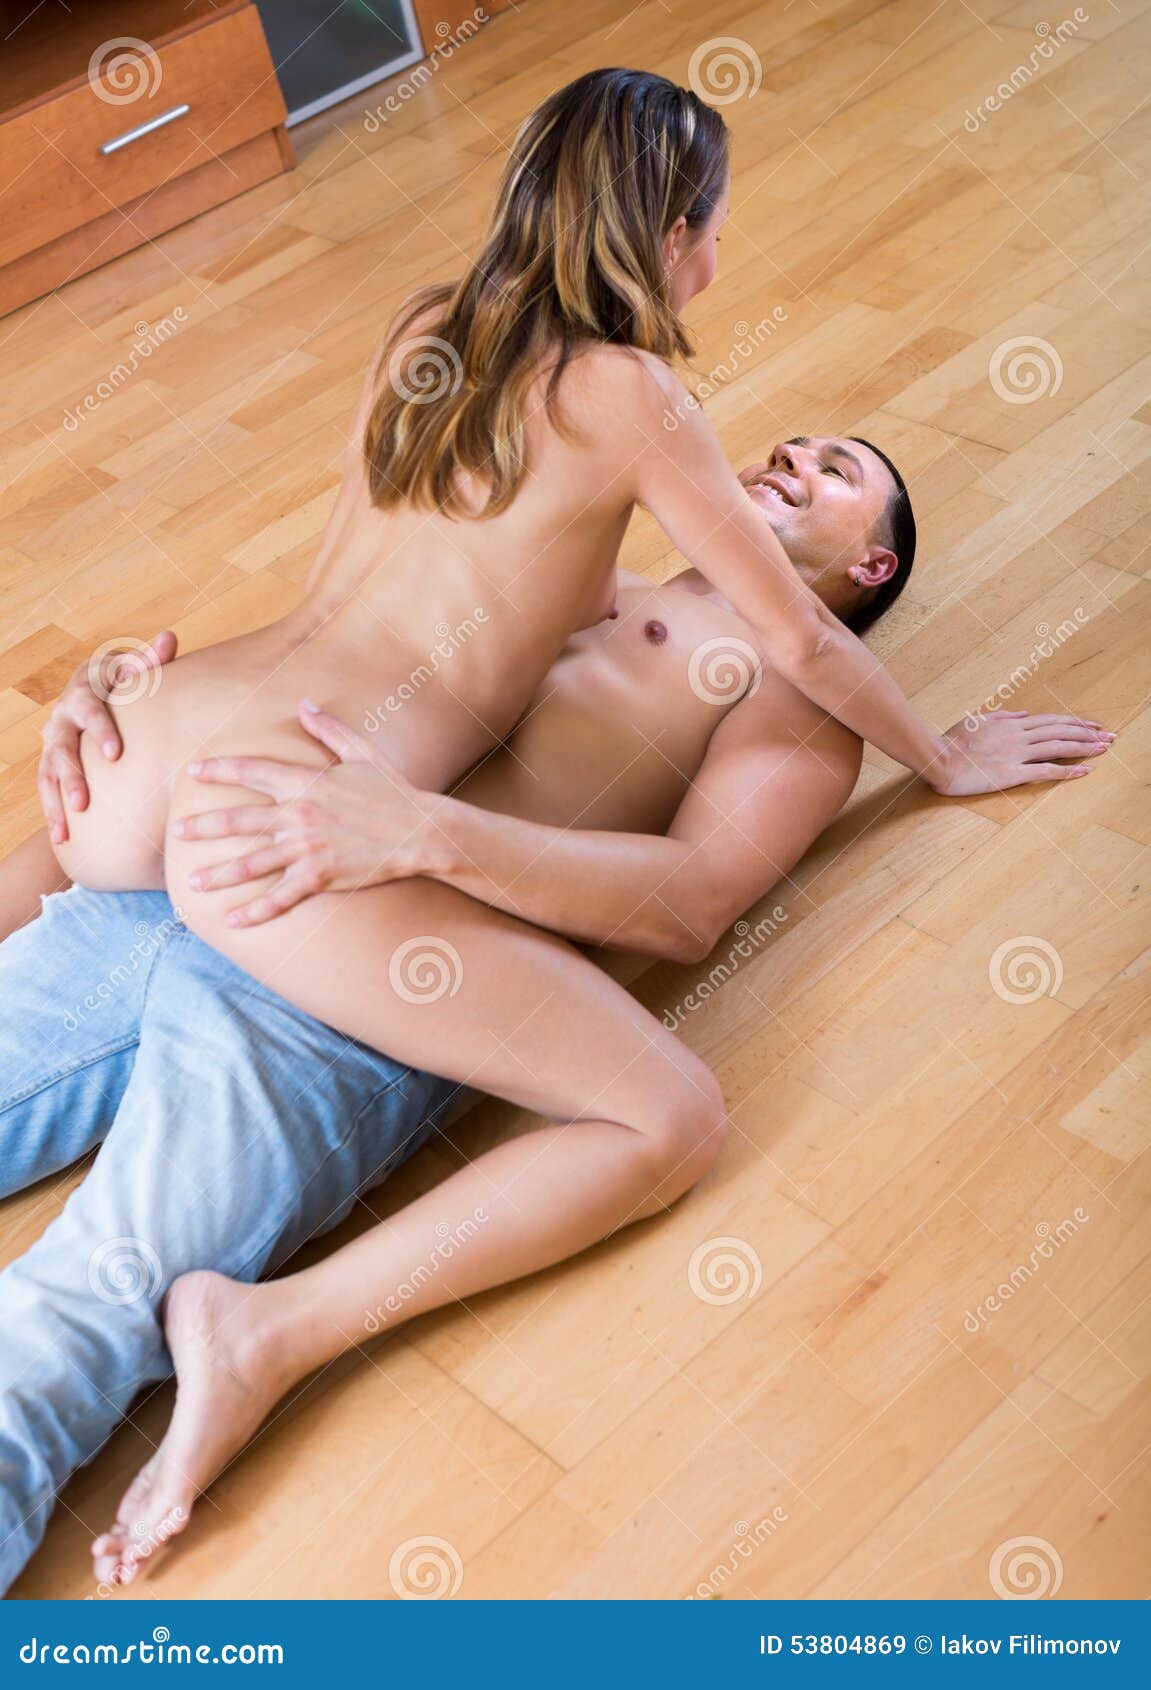 tumblr amateur nude couples Fucking Pics Hq